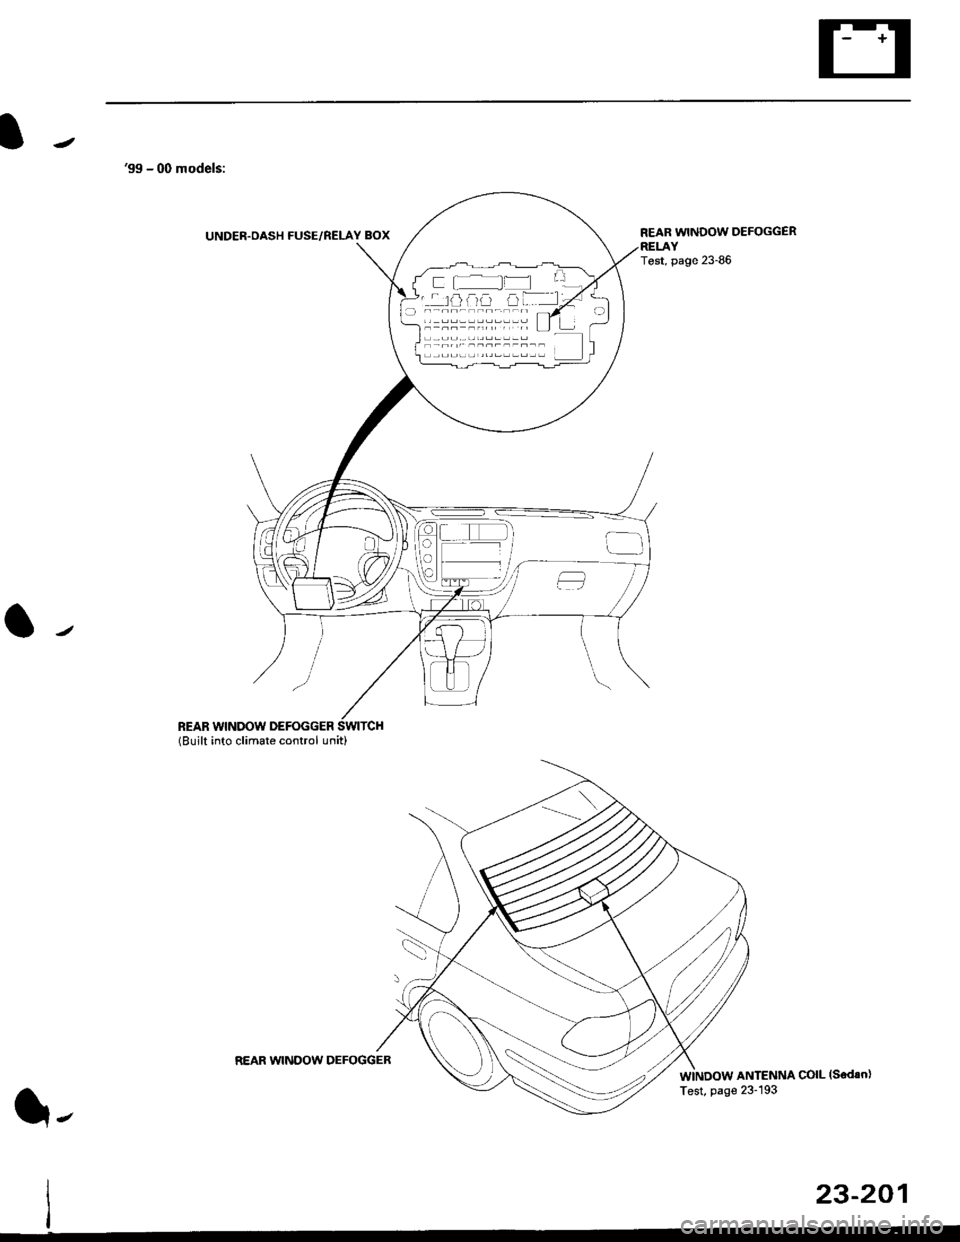 HONDA CIVIC 1999 6.G Workshop Manual 99 - 00 models:
UNDER.OASH FUSE/RELAY BOX
REAR WINDOW DEFOGGER(Built into climate control unit)
REAR WINDOW DEFOGGER
Test, page 23-86
ANTENNA COIL (Sedsn)
f l_ f= L
rofia trF.-lj
l-
REAR WINDOW DE